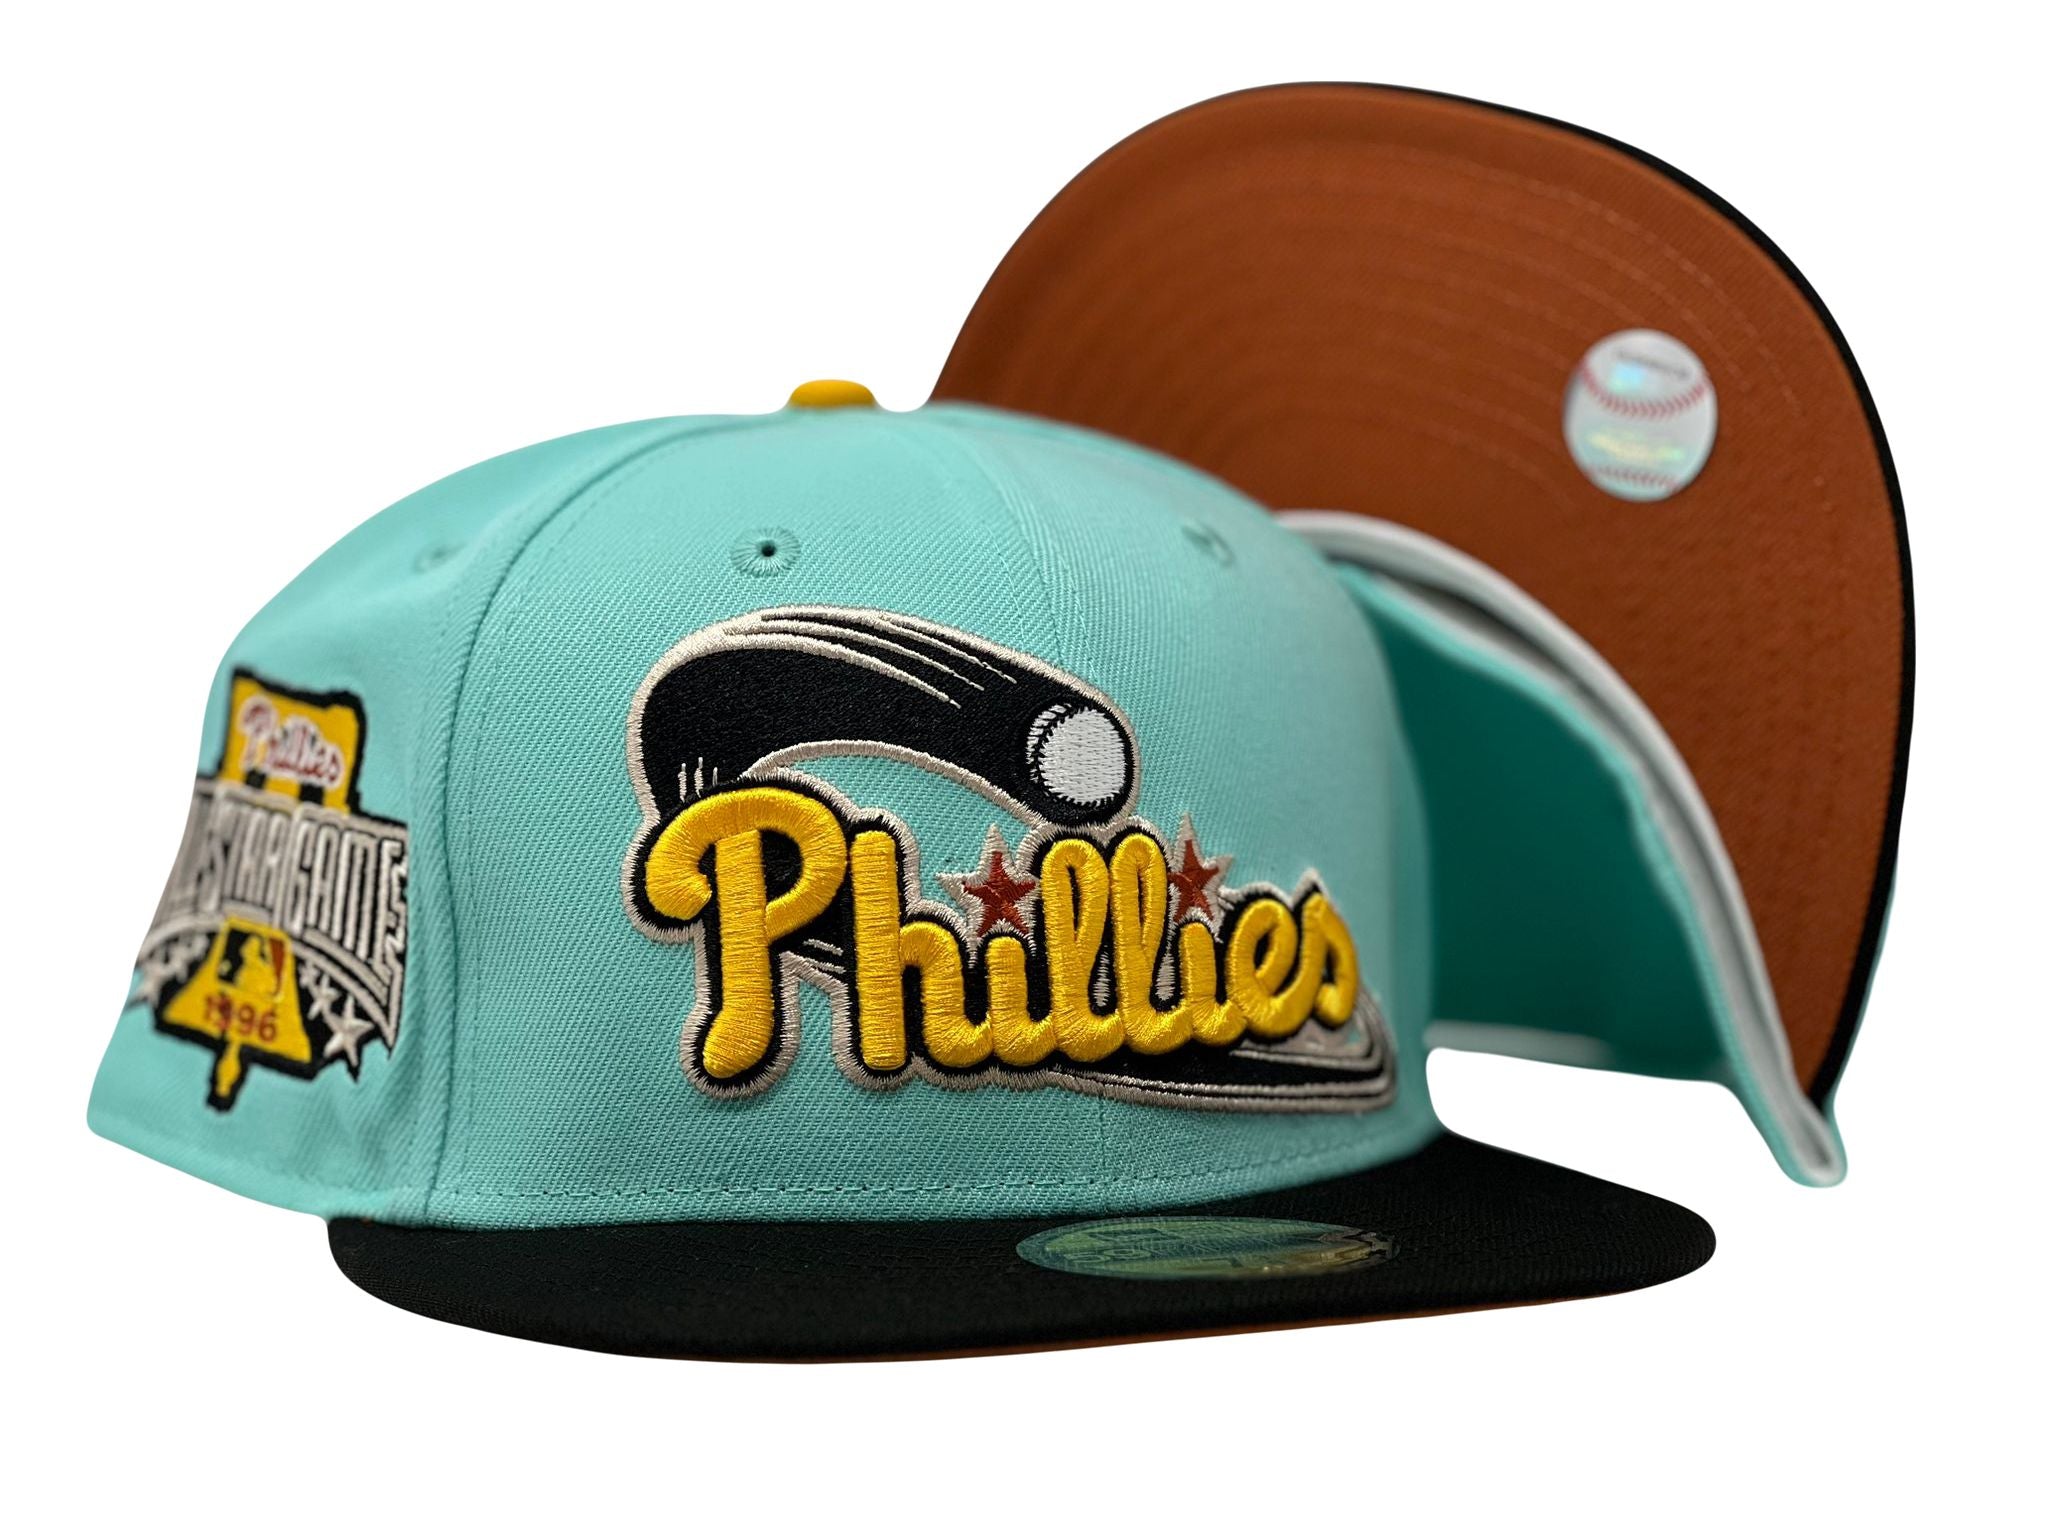 Philadelphia Phillies Hats in Philadelphia Phillies Team Shop 